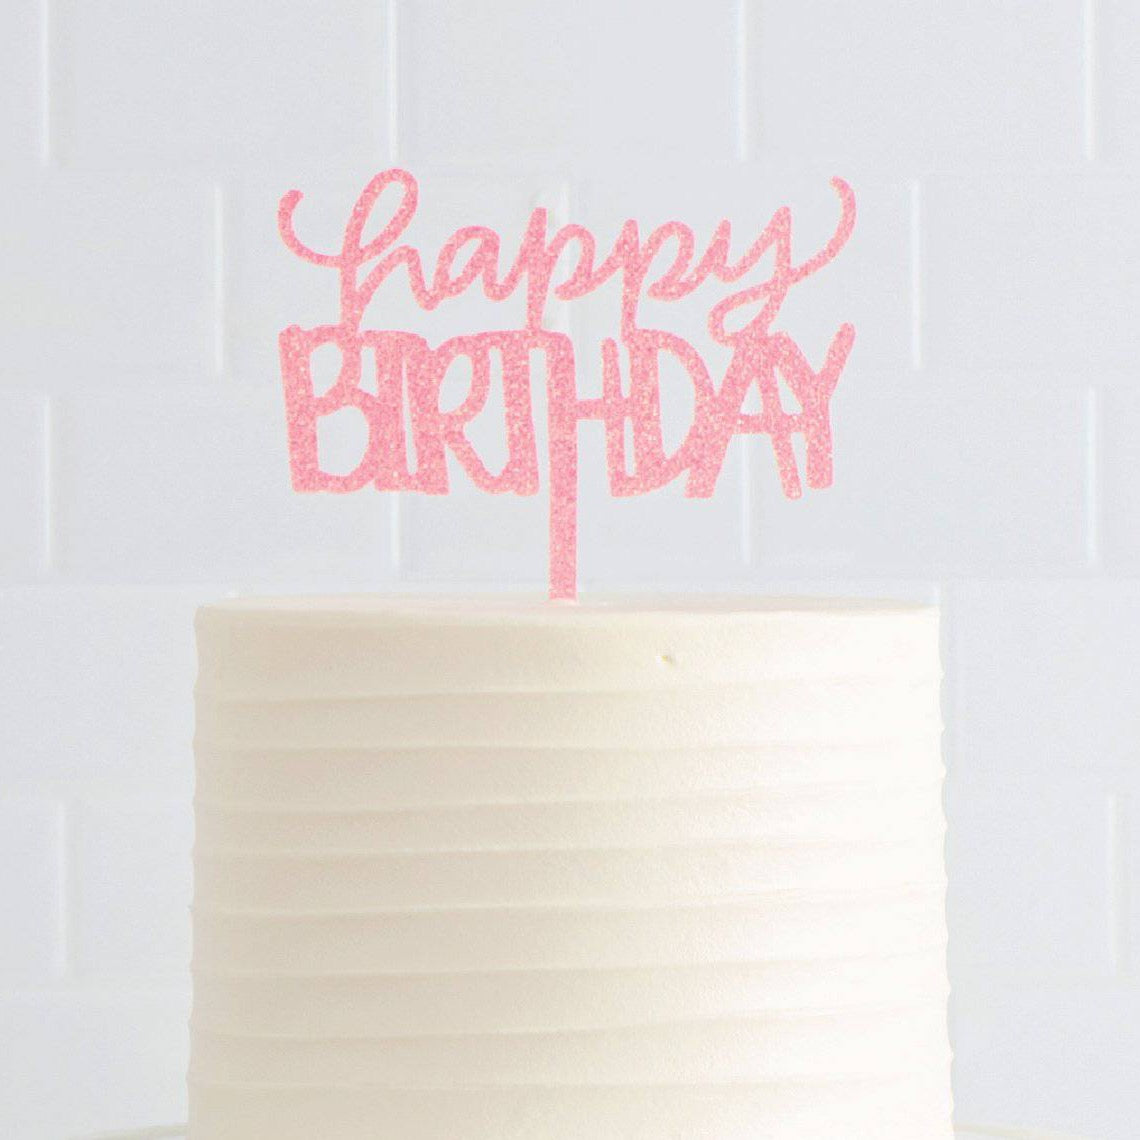 Pink Glitter | Happy Birthday Cake Topper - Sweet E's Bake Shop